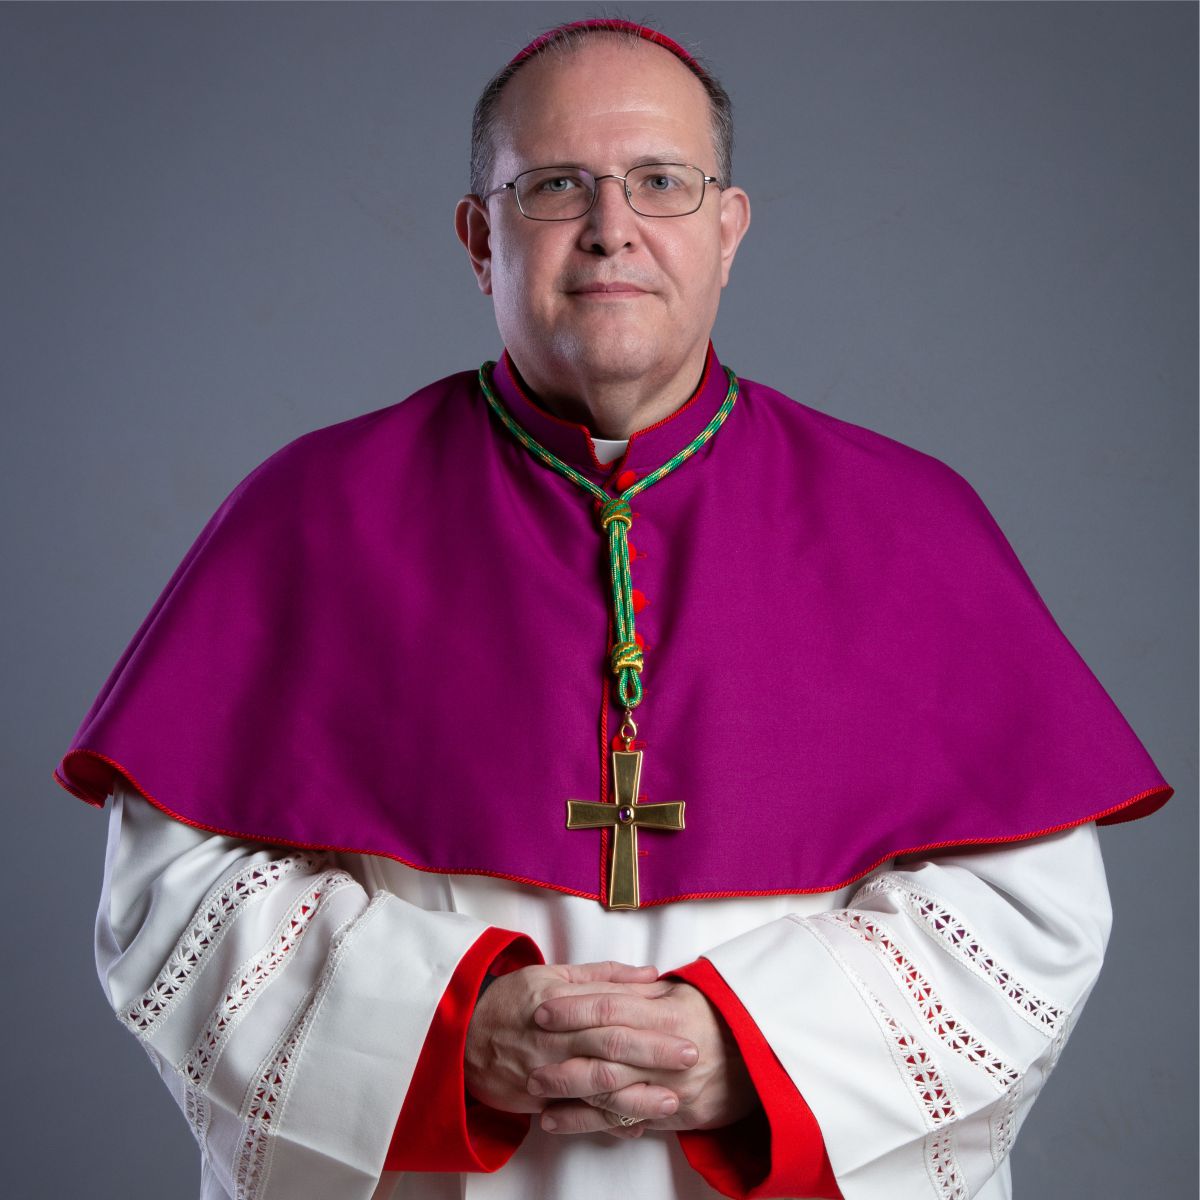 Bishop Camilleri